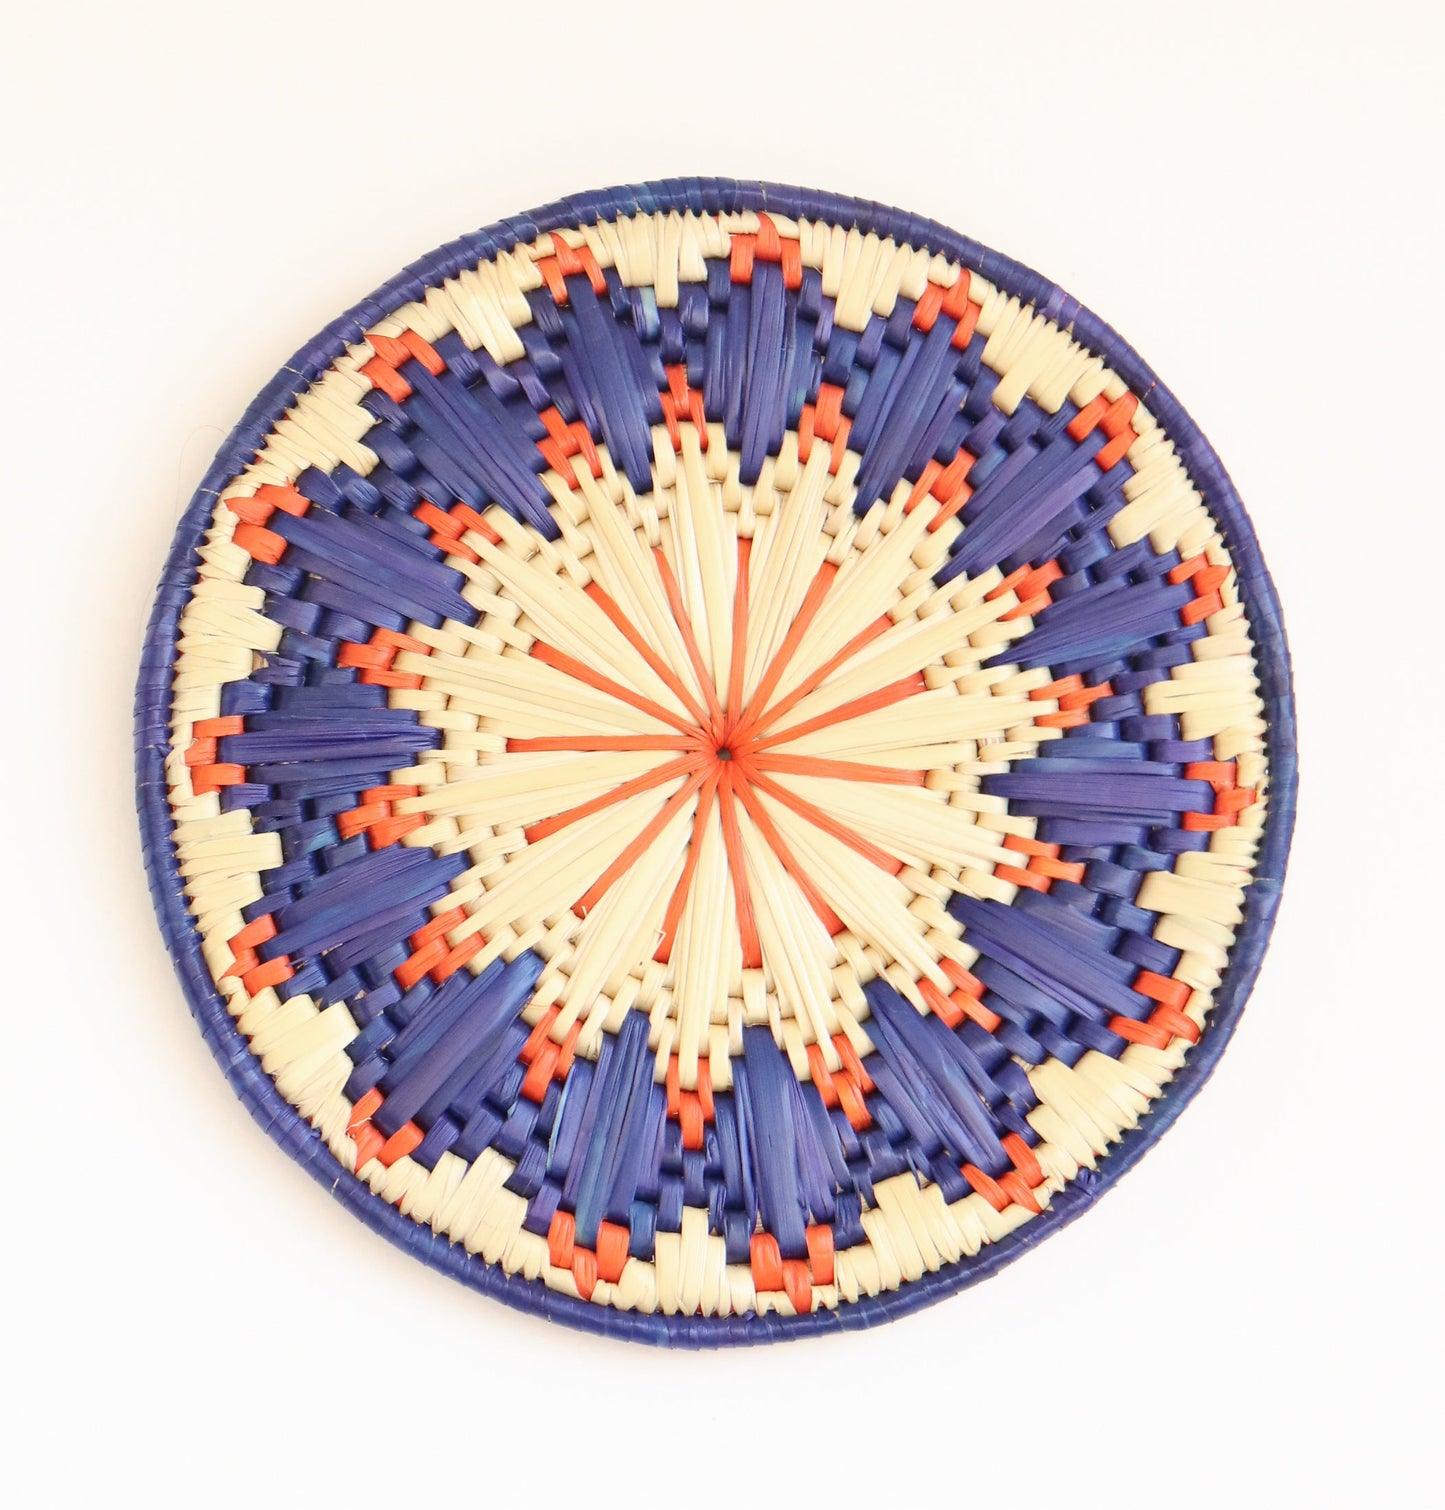 Decorative wall plates - Moonj grass basket - Wall basket for decor - Handwoven grass plate